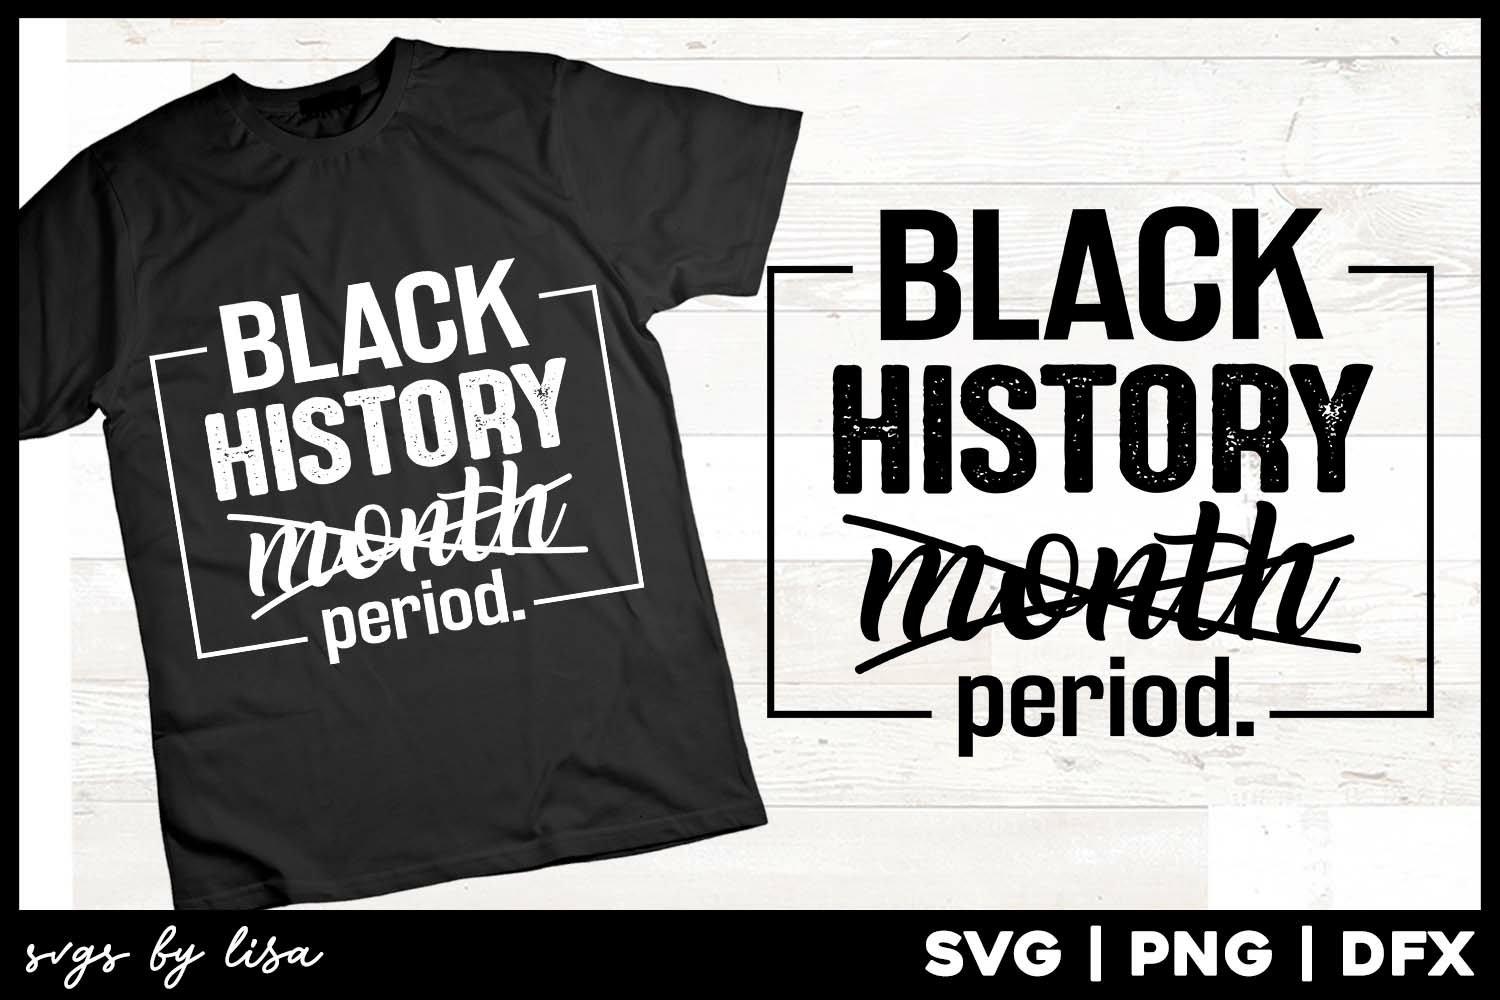 Black history period t-shirt design.